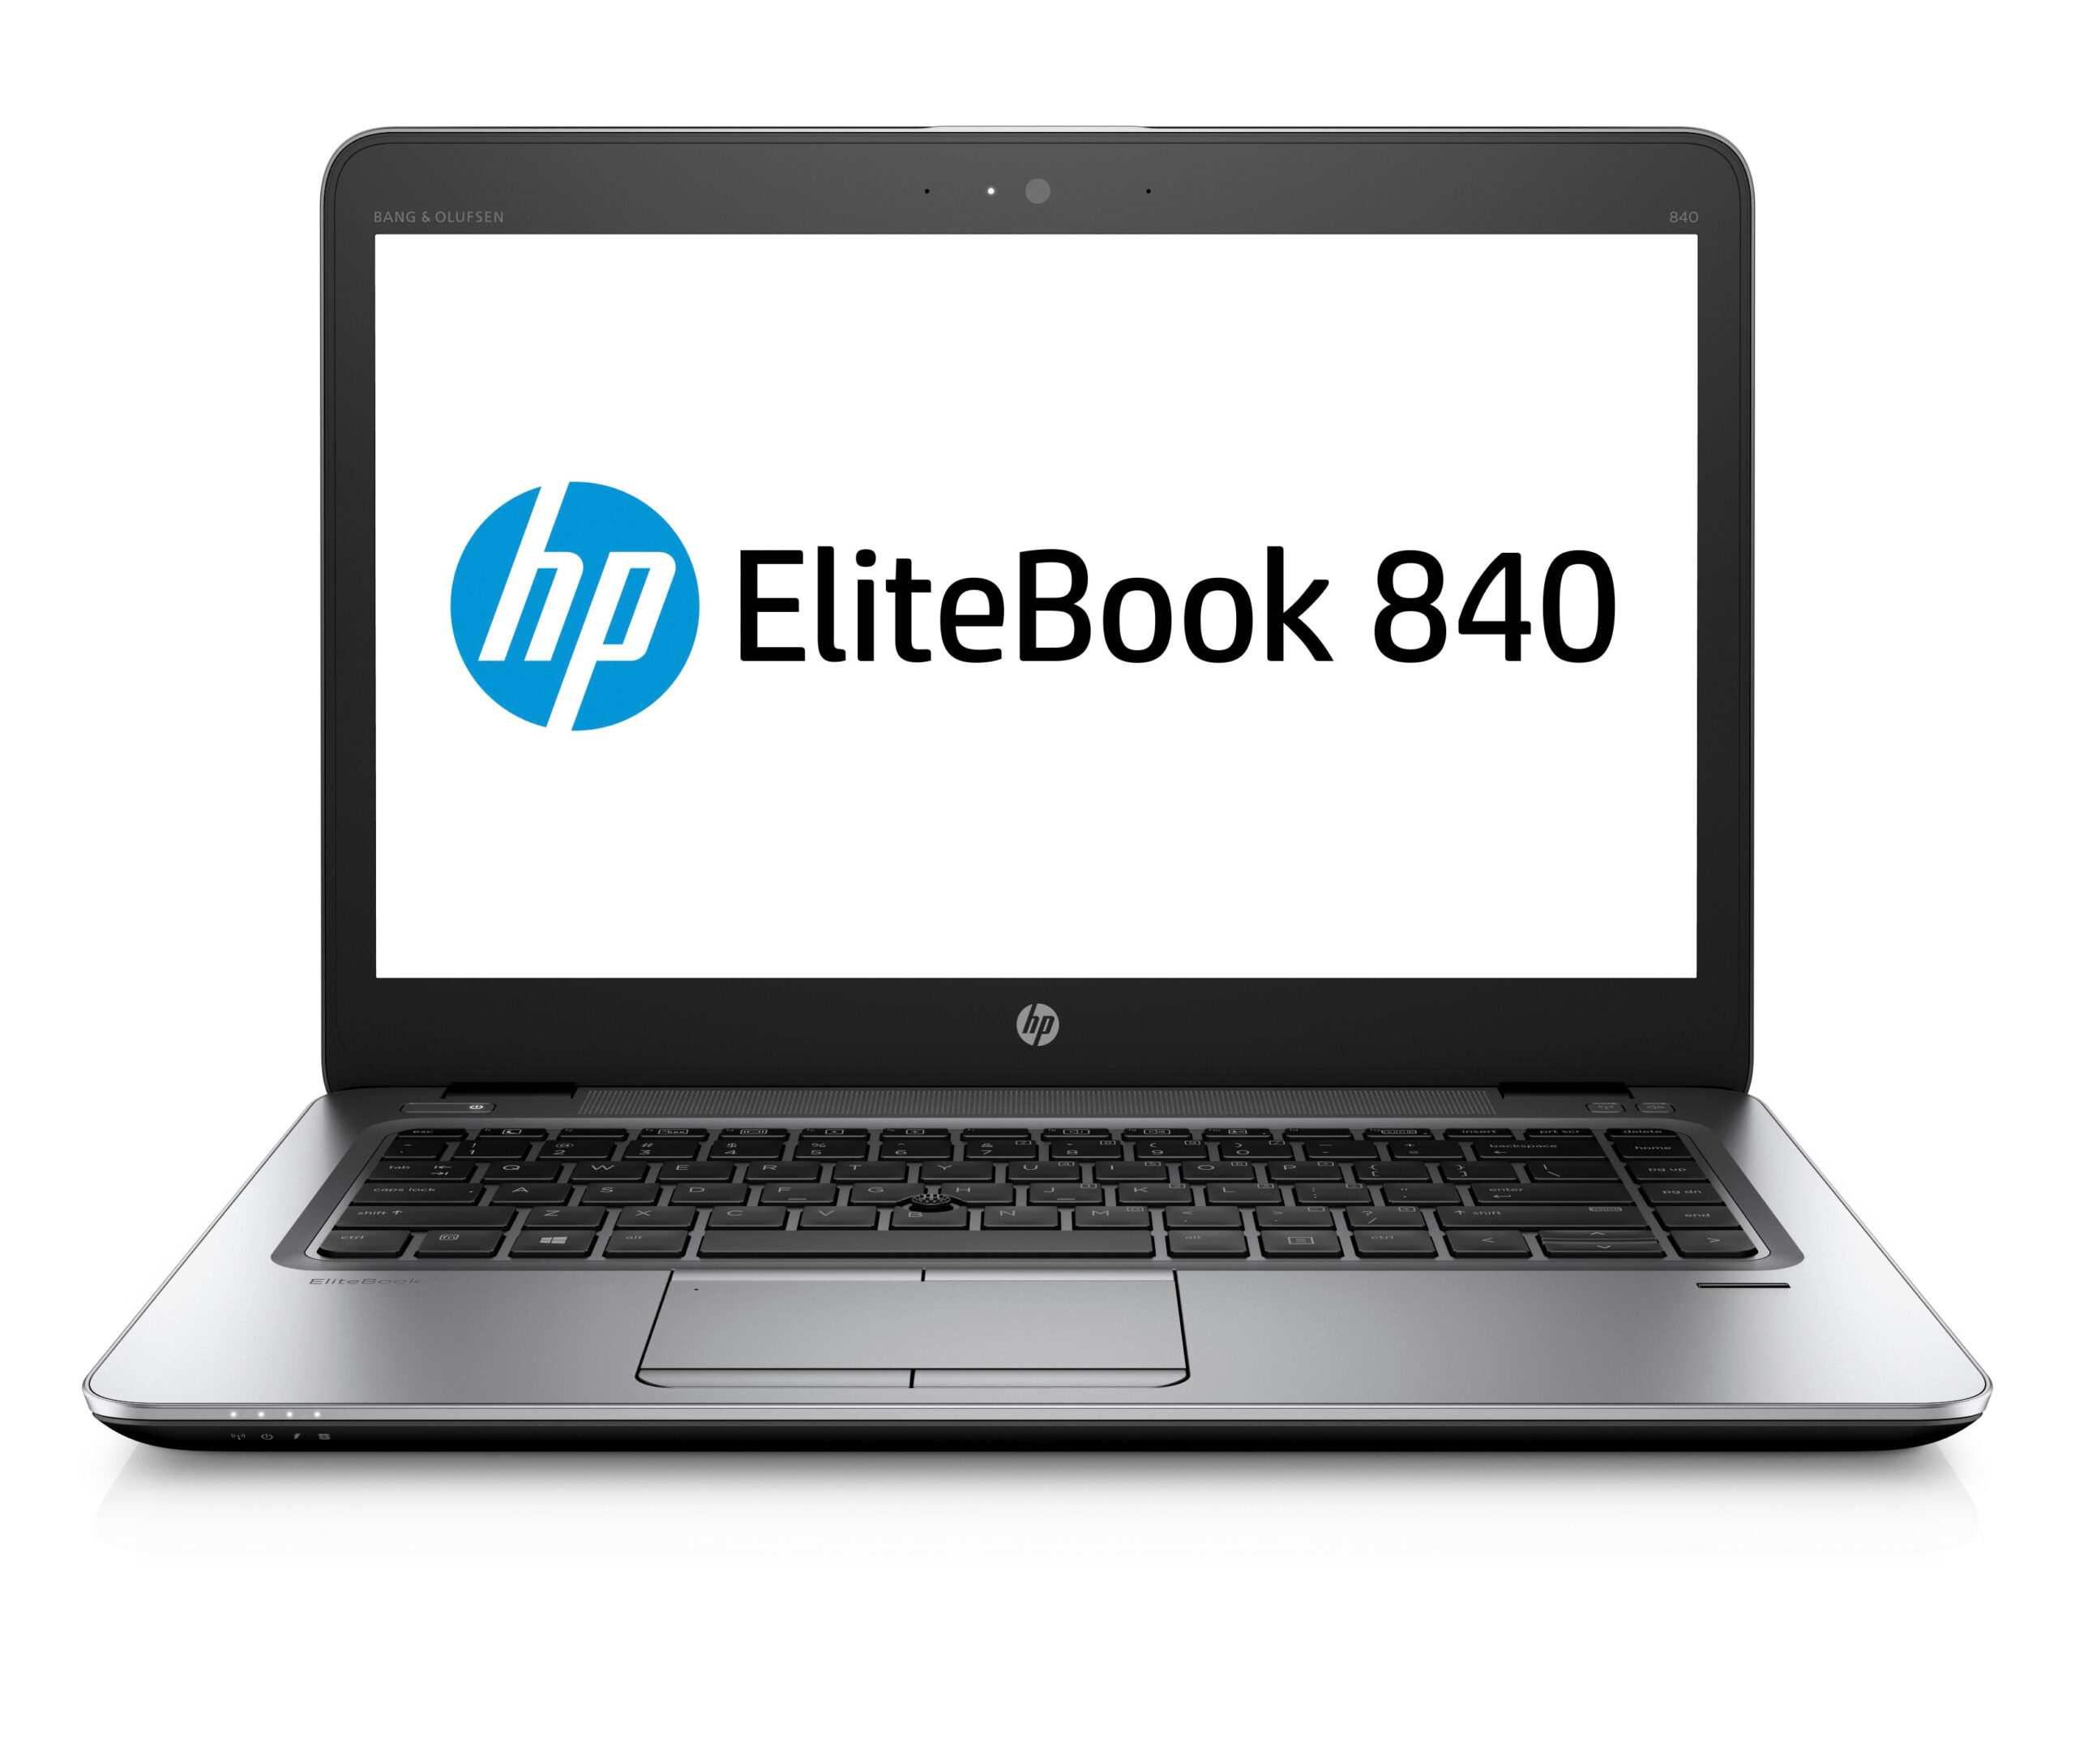 Elitebook 840 G4 I7 7500u 2x8gb Hp Comm Notebook An Z2x65ea Abz 190781392293